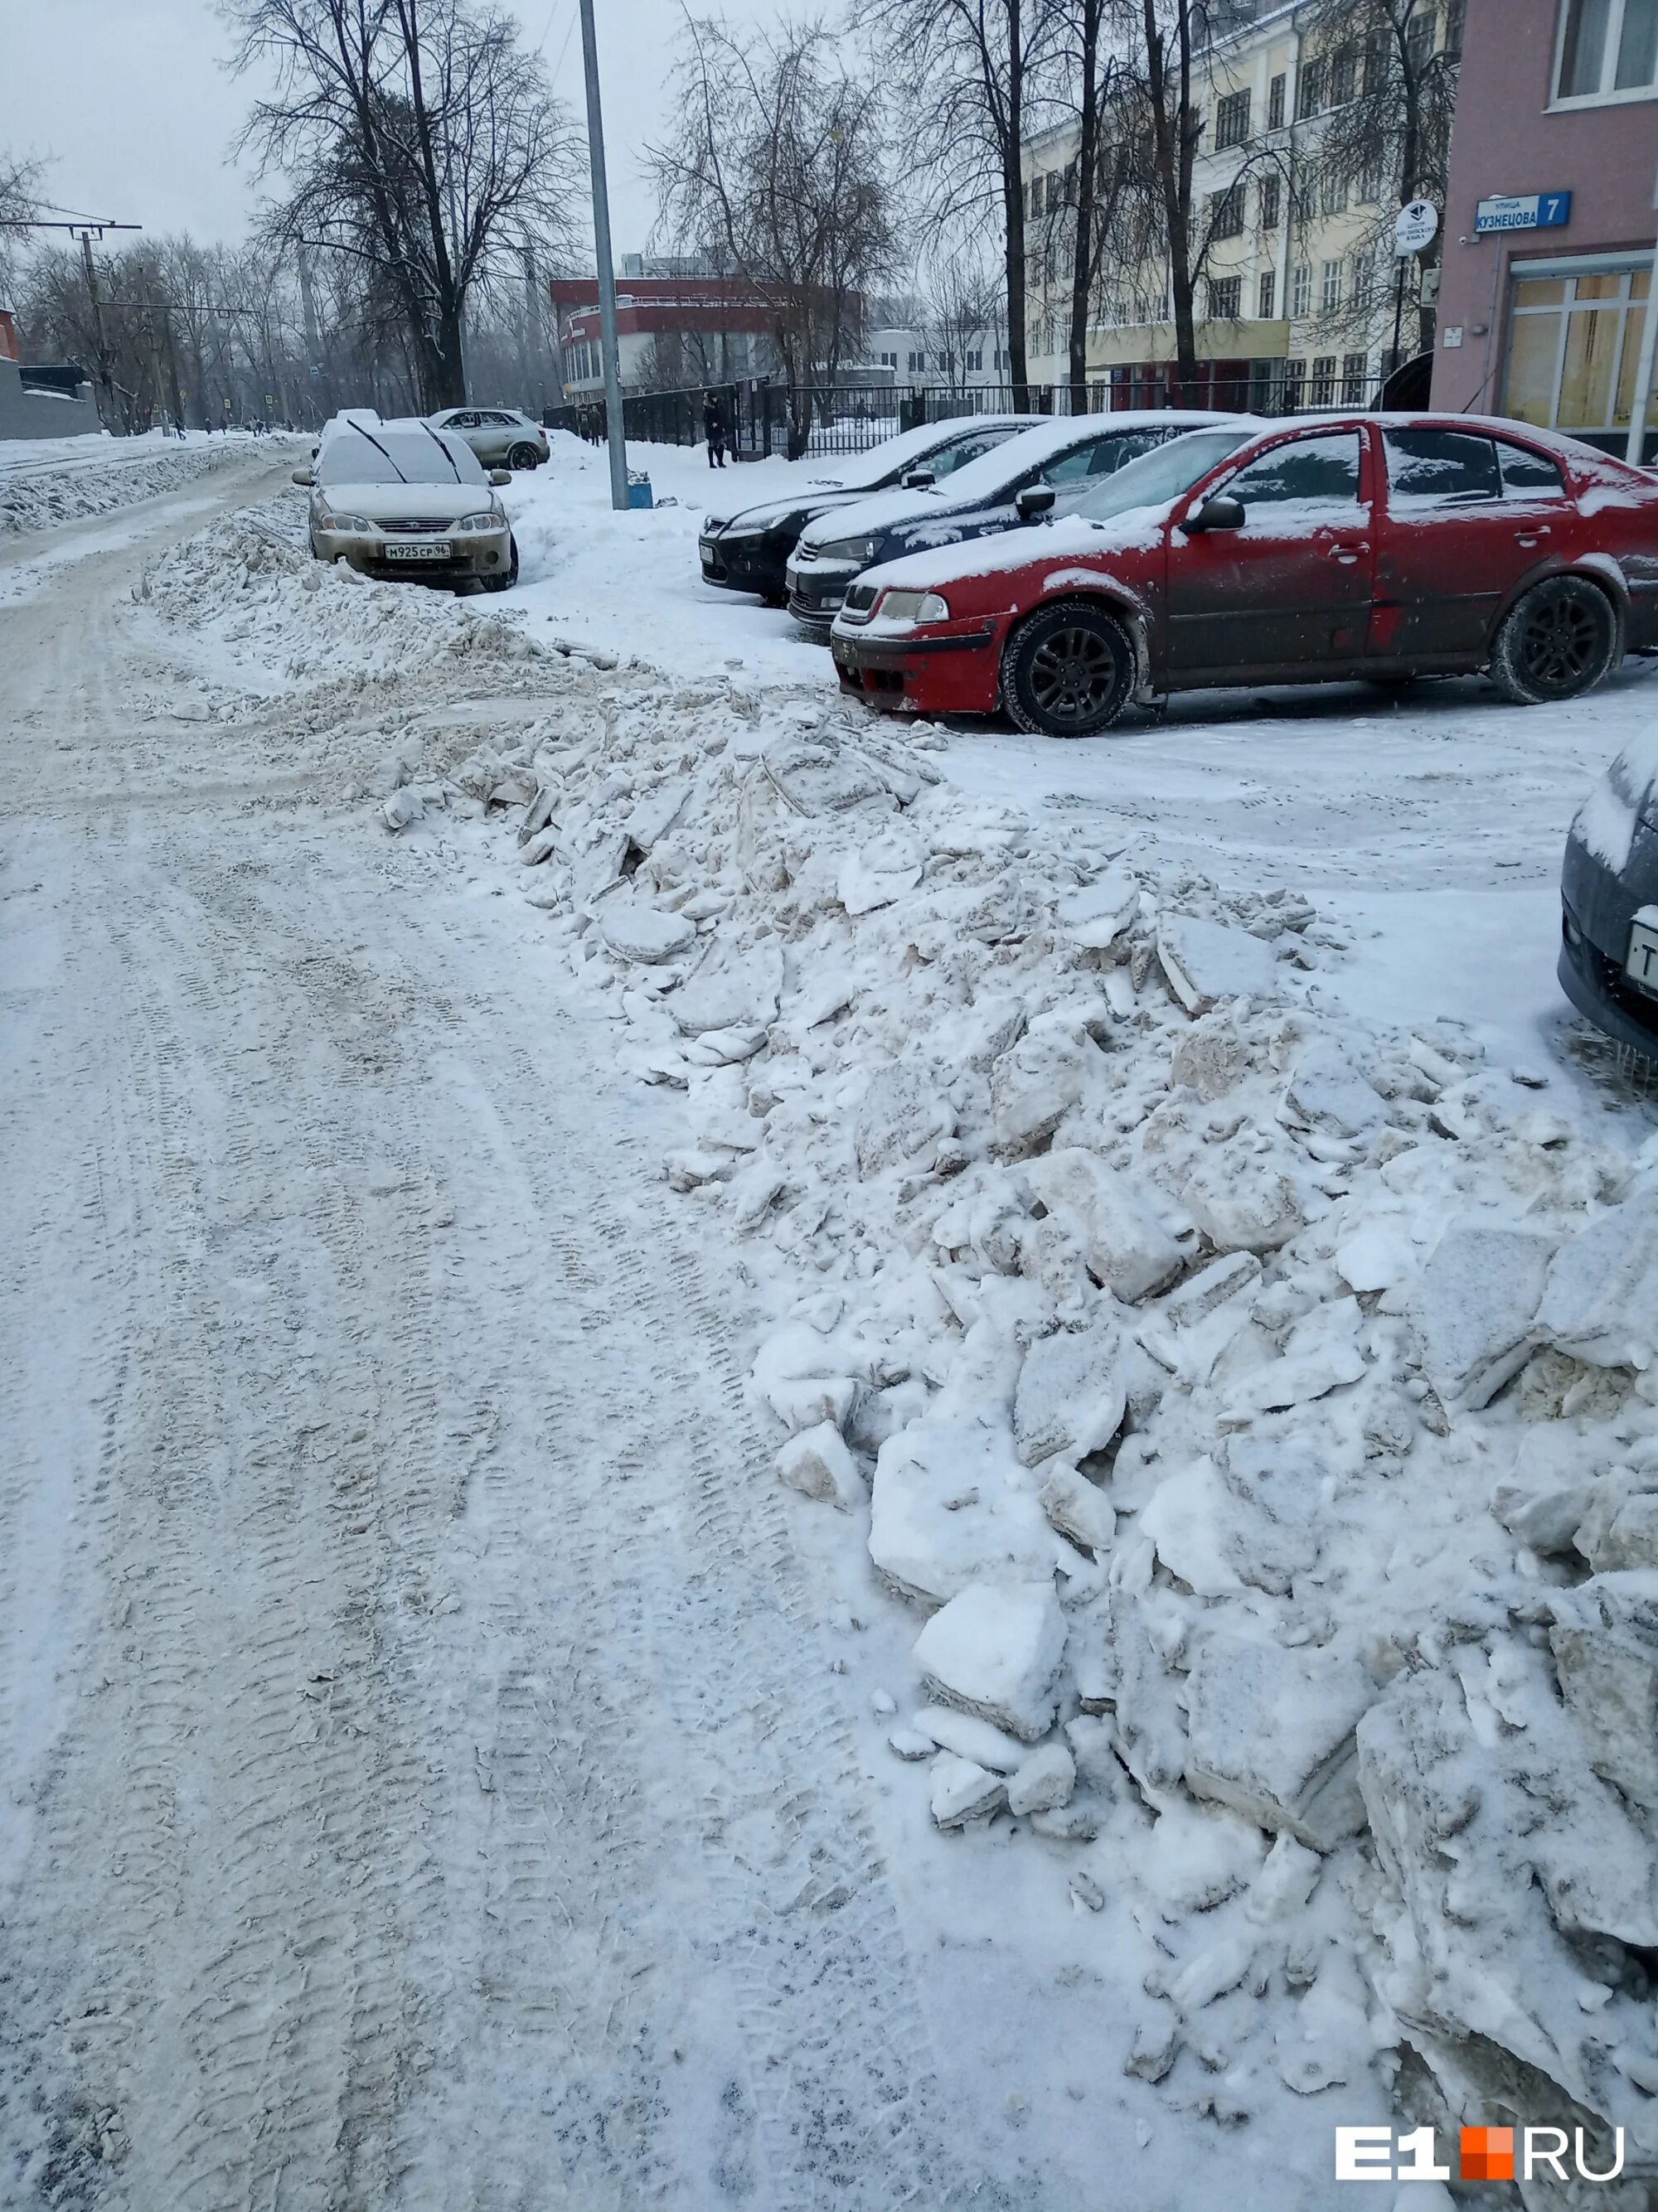 Дорогу завалило снегом. Снег во дворе. Двор завален снегом. Дороги Екатеринбурга зимой во дворах. Щекино в снегу.